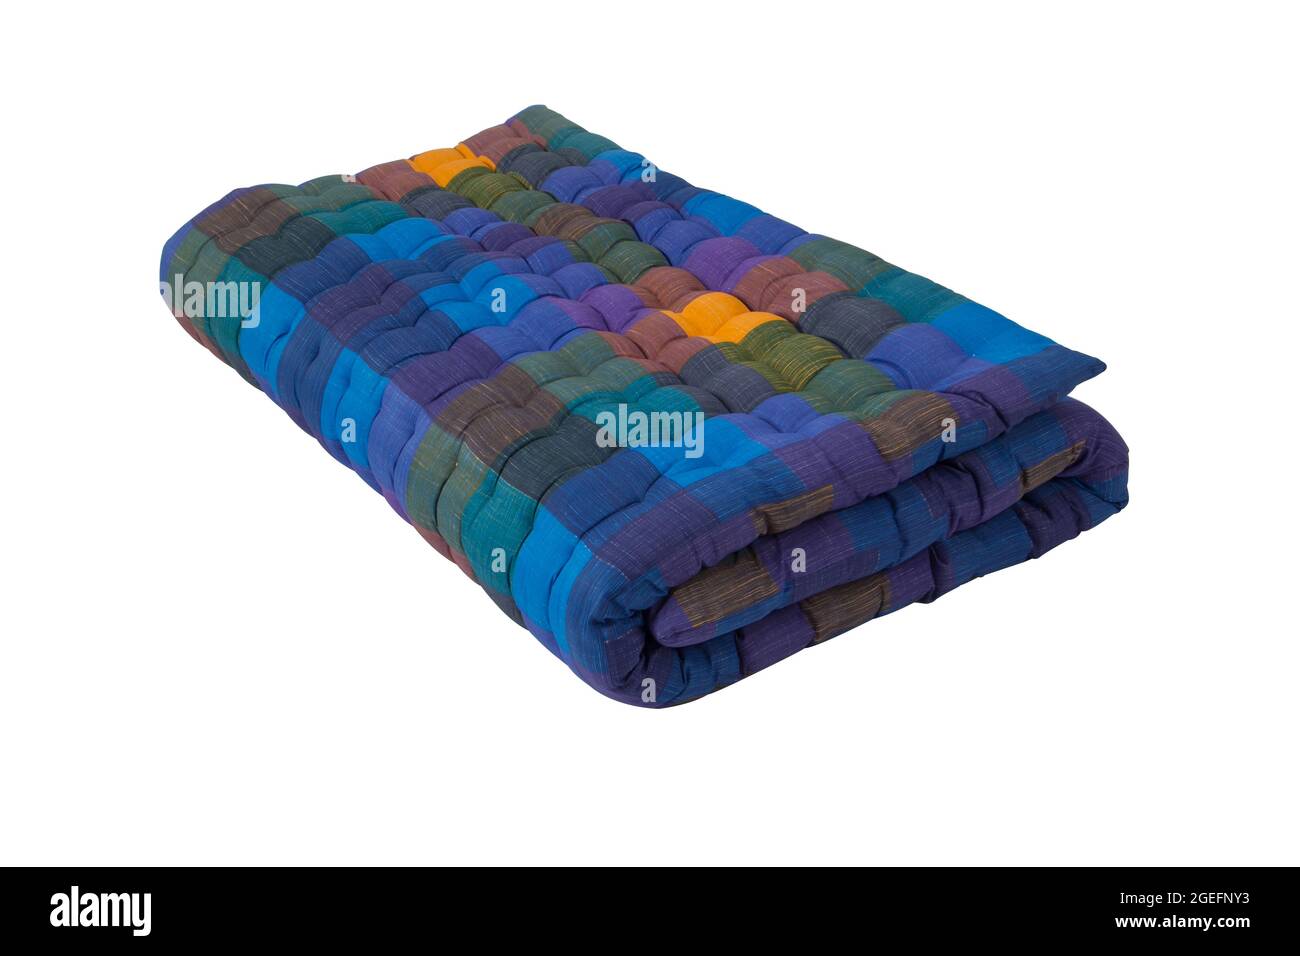 Folded new colorful mattress isolated on white background Stock Photo